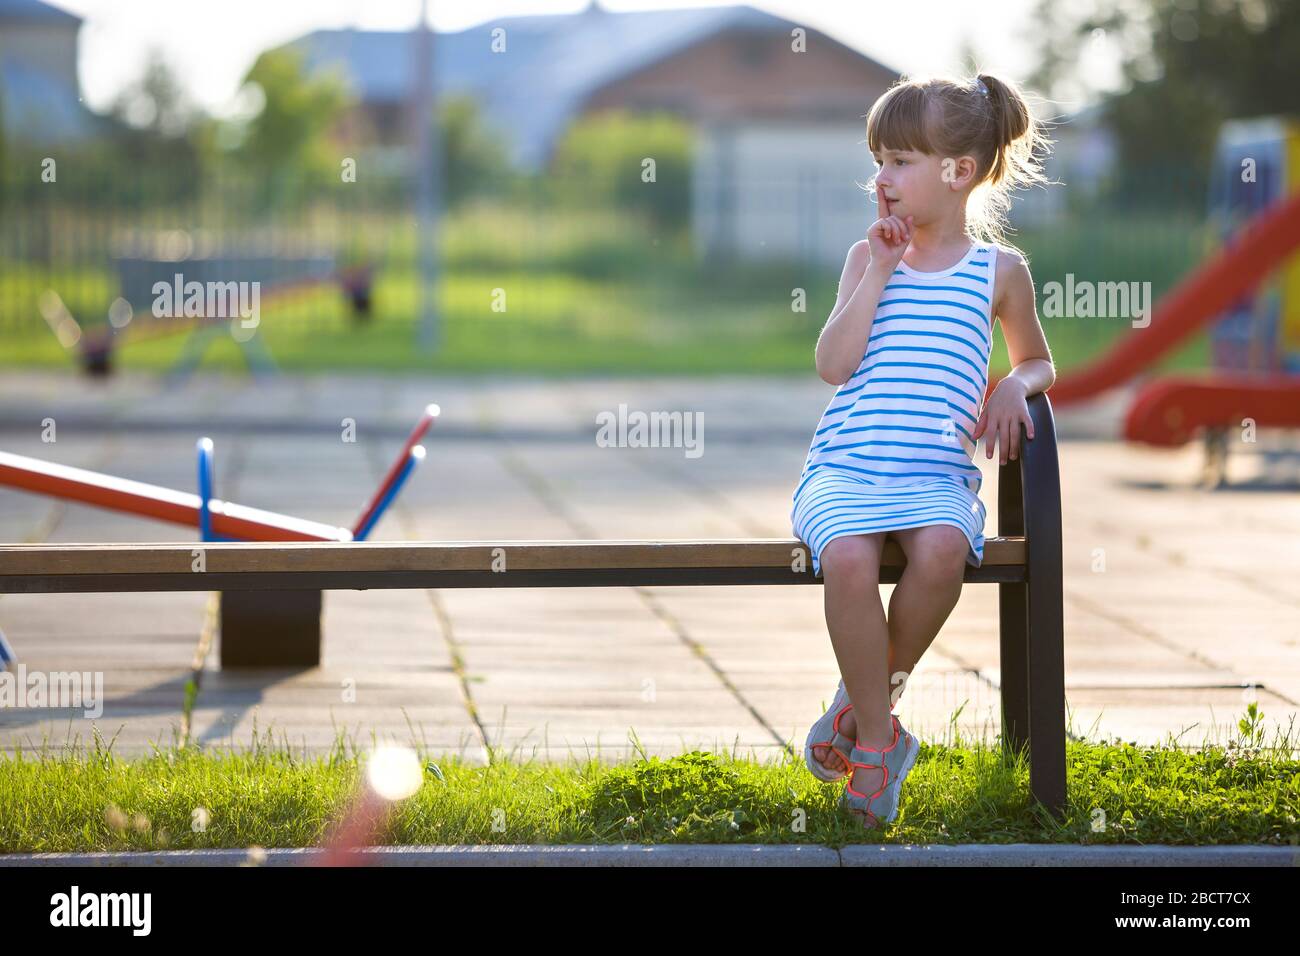 Charming Little Girl in Short Dress. Stock Photo - Image of